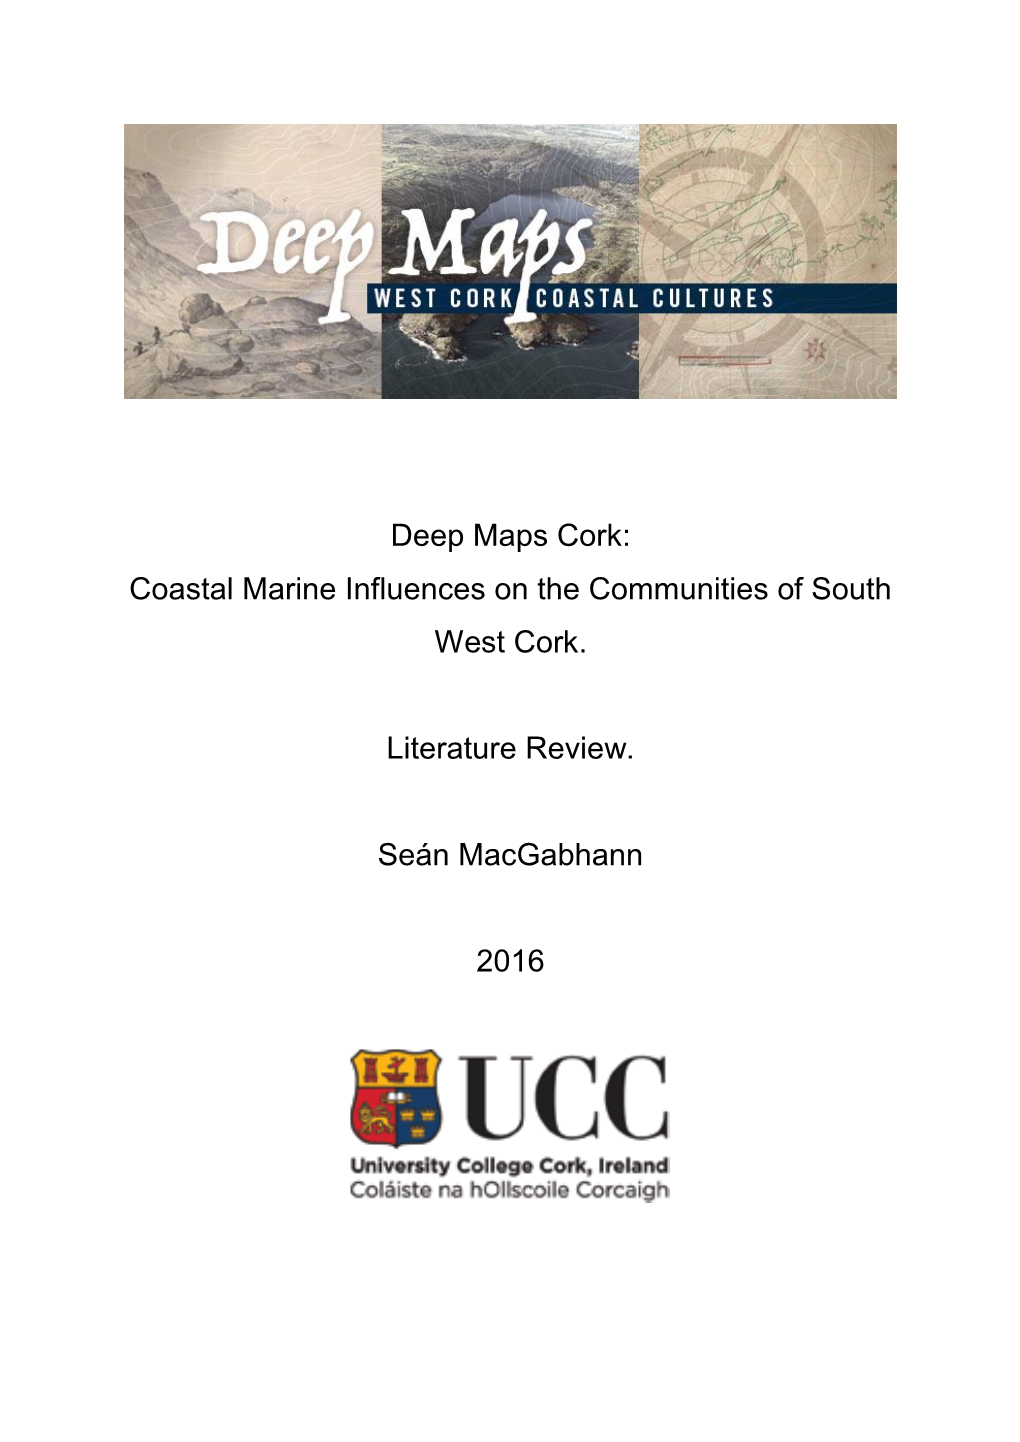 Deep Maps Cork Literature Review